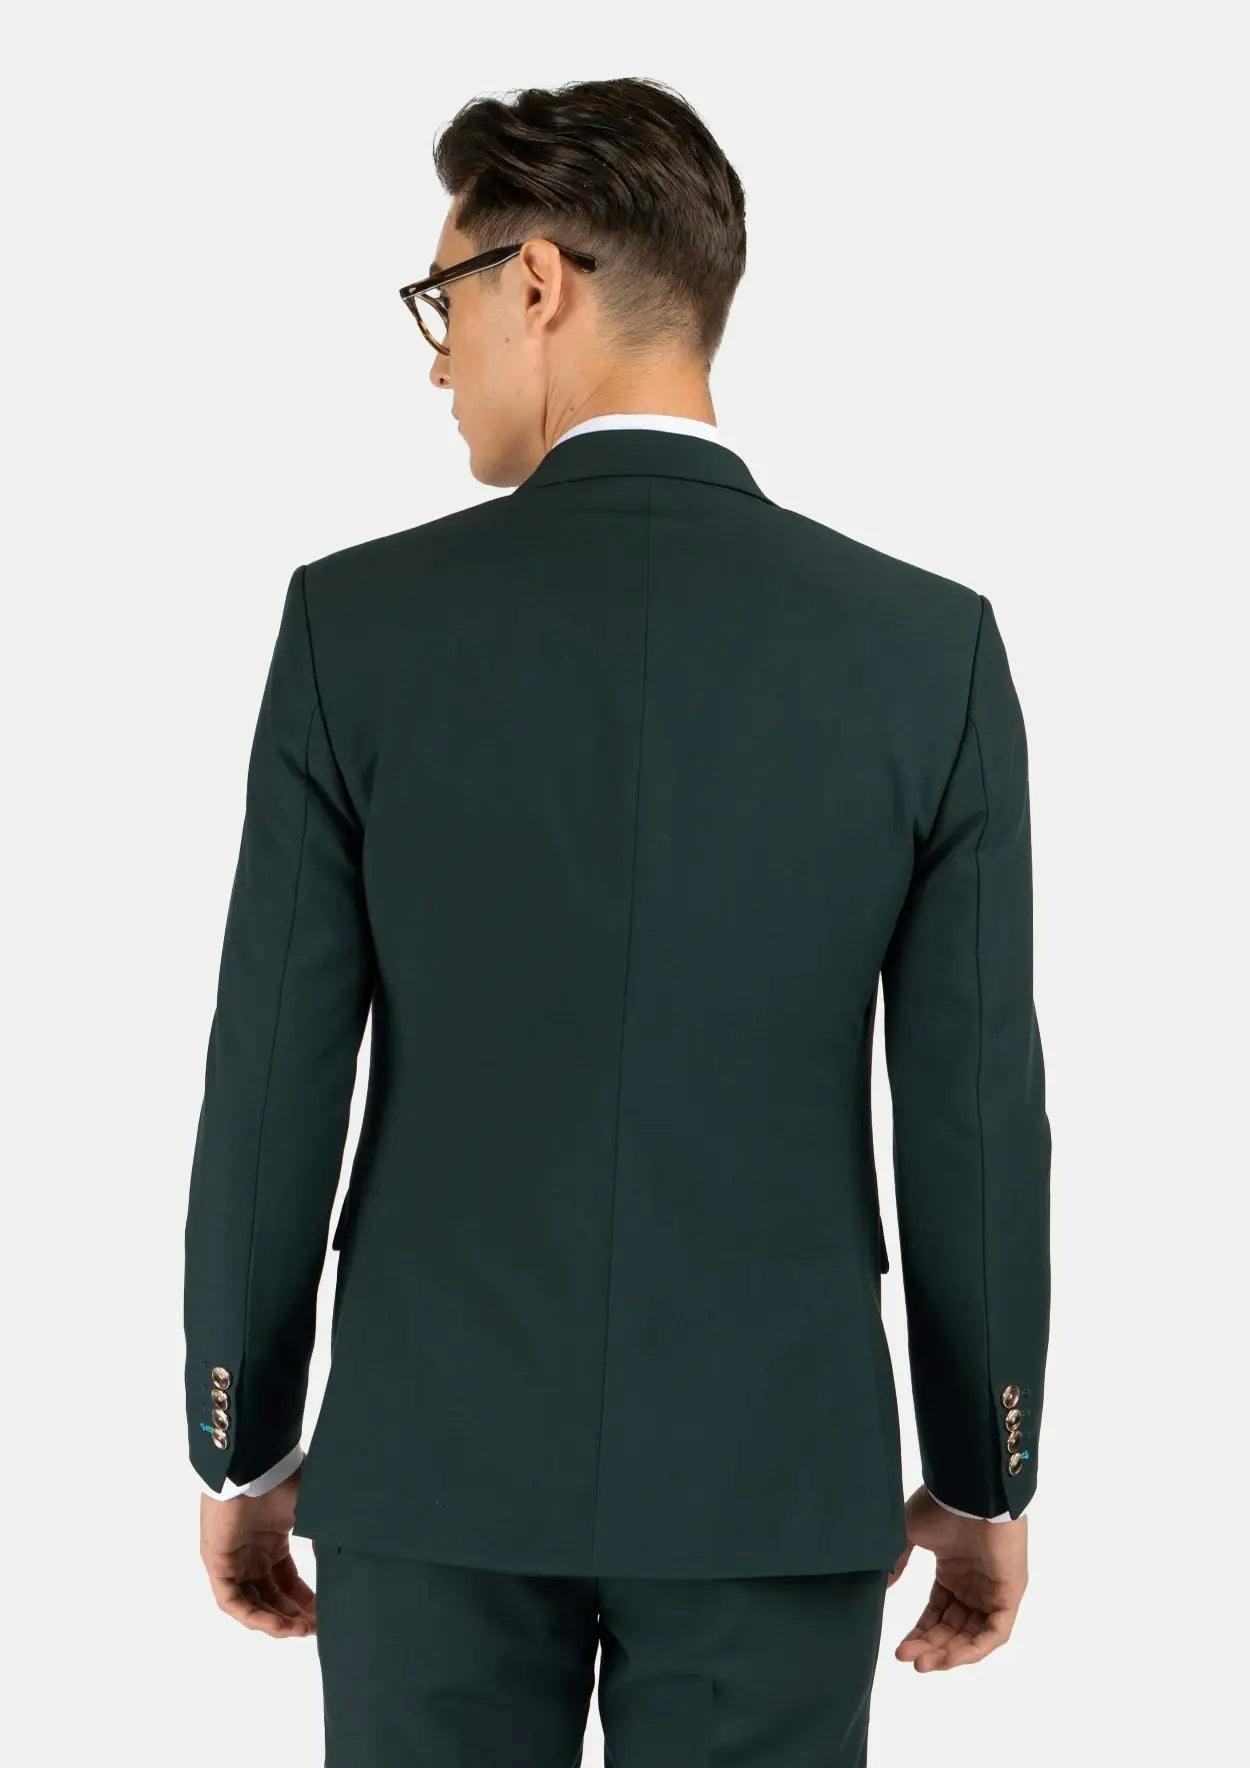 Ellis Emerald Green Stretch Suit - SARTORO